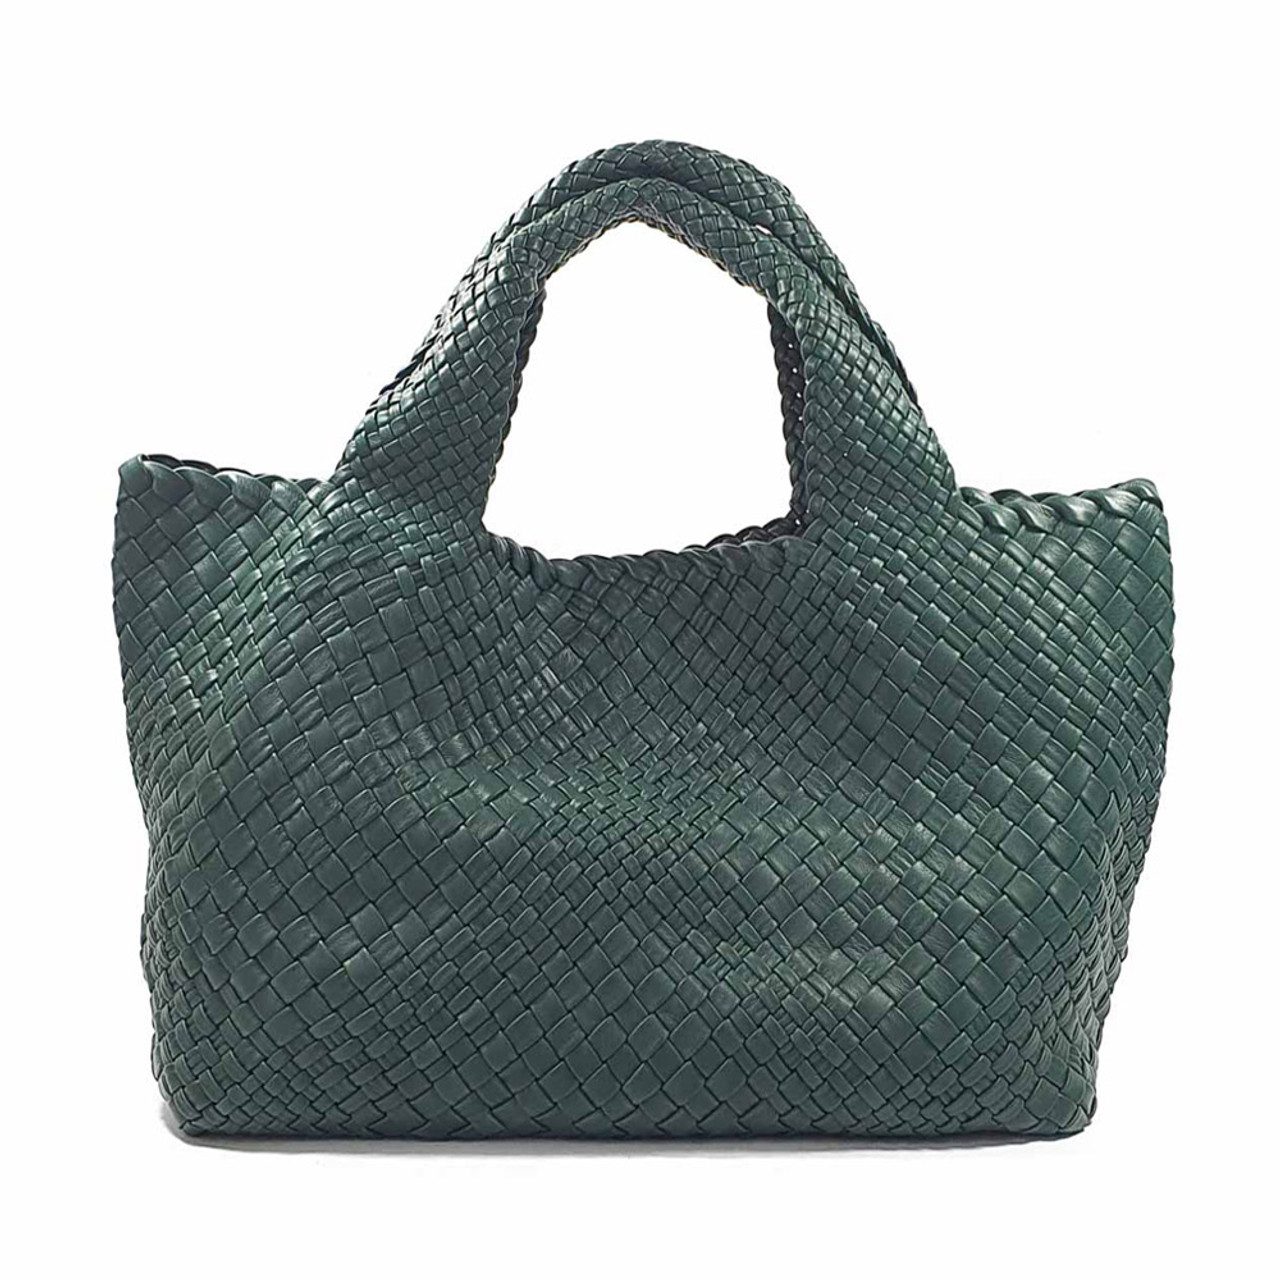 Ghibli Hand Woven Italian Leather Grab Bag - Taupe